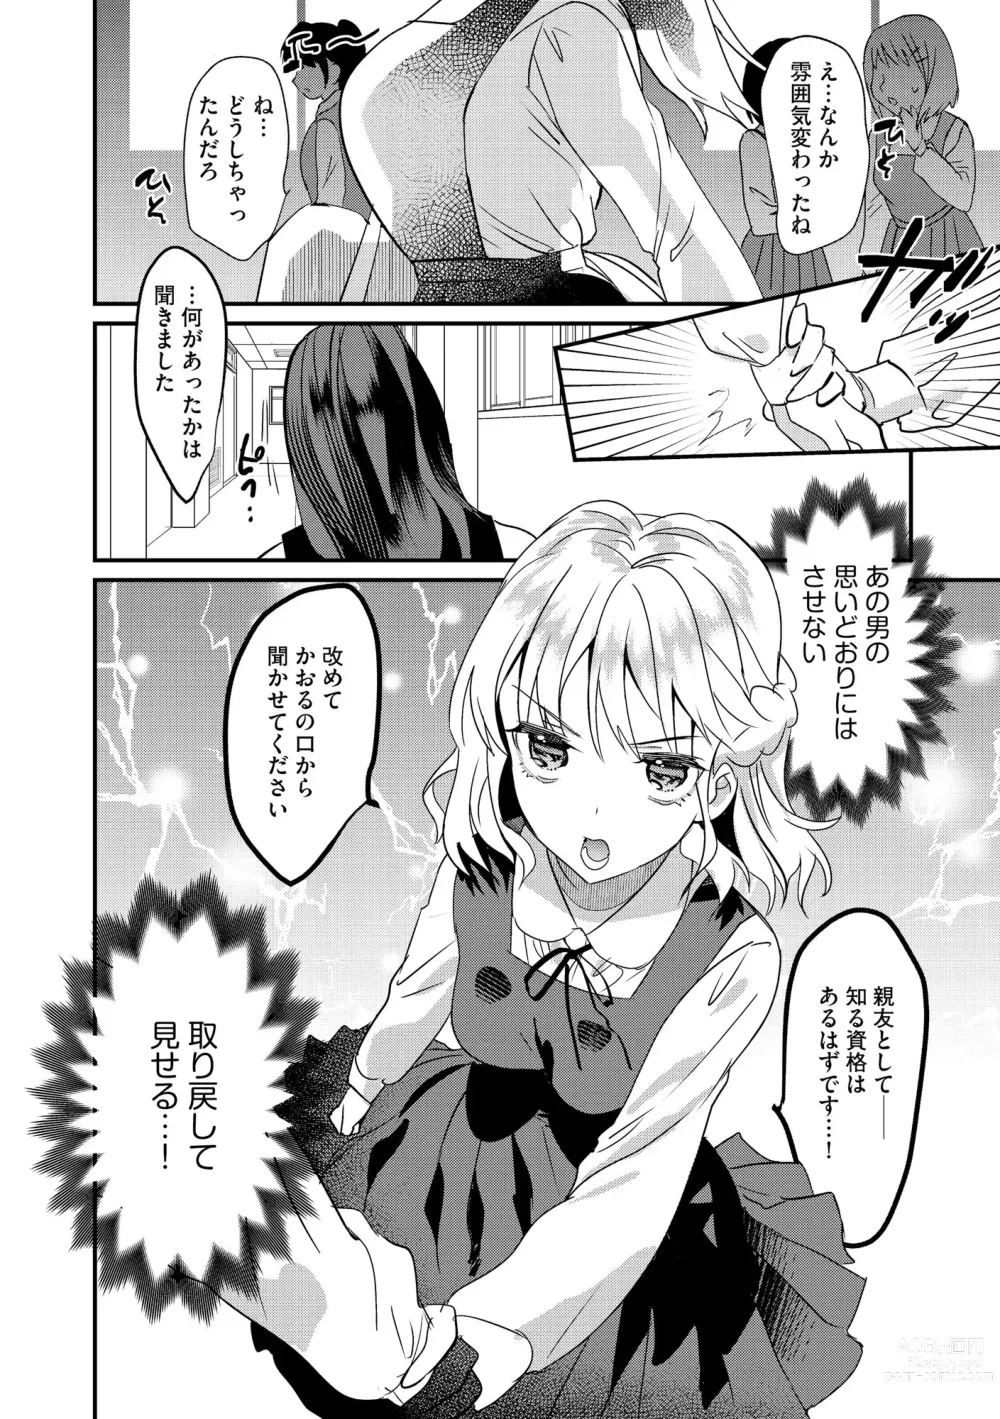 Page 26 of manga Cyberia Plus Vol. 14